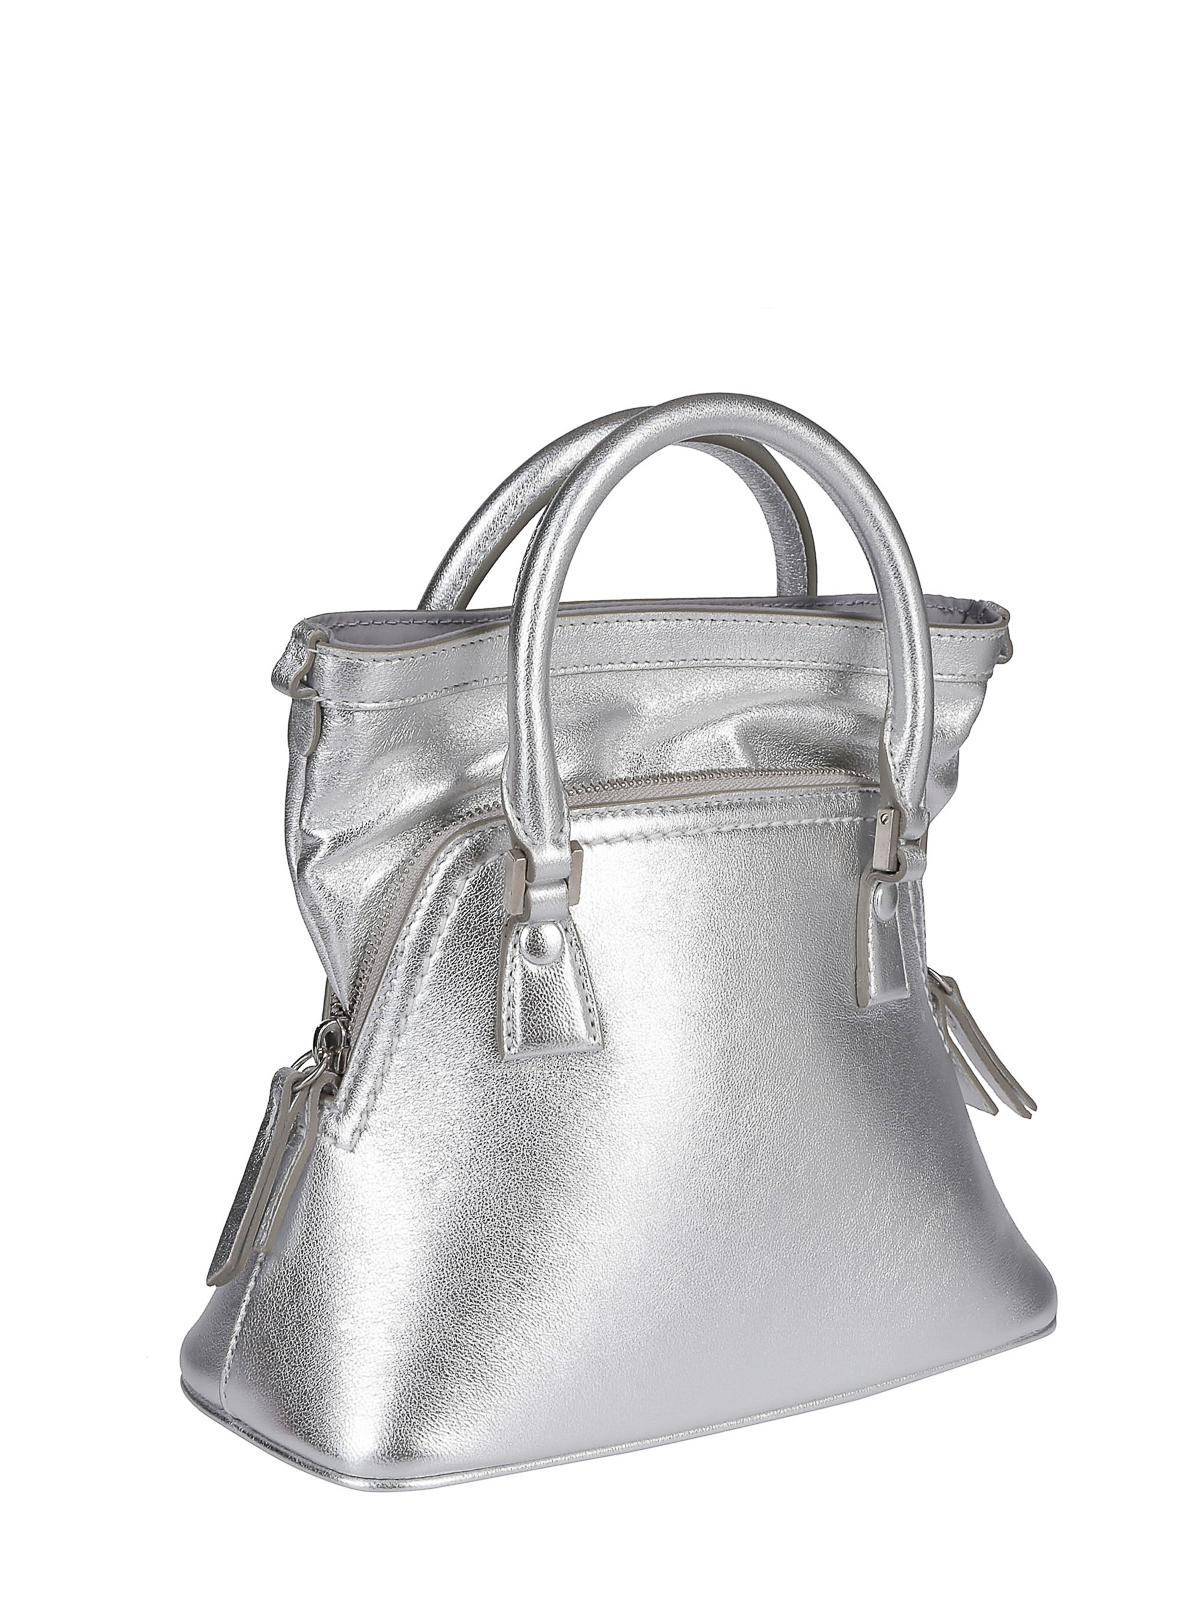 Cross body bags Maison Margiela - 5AC silver leather bag 